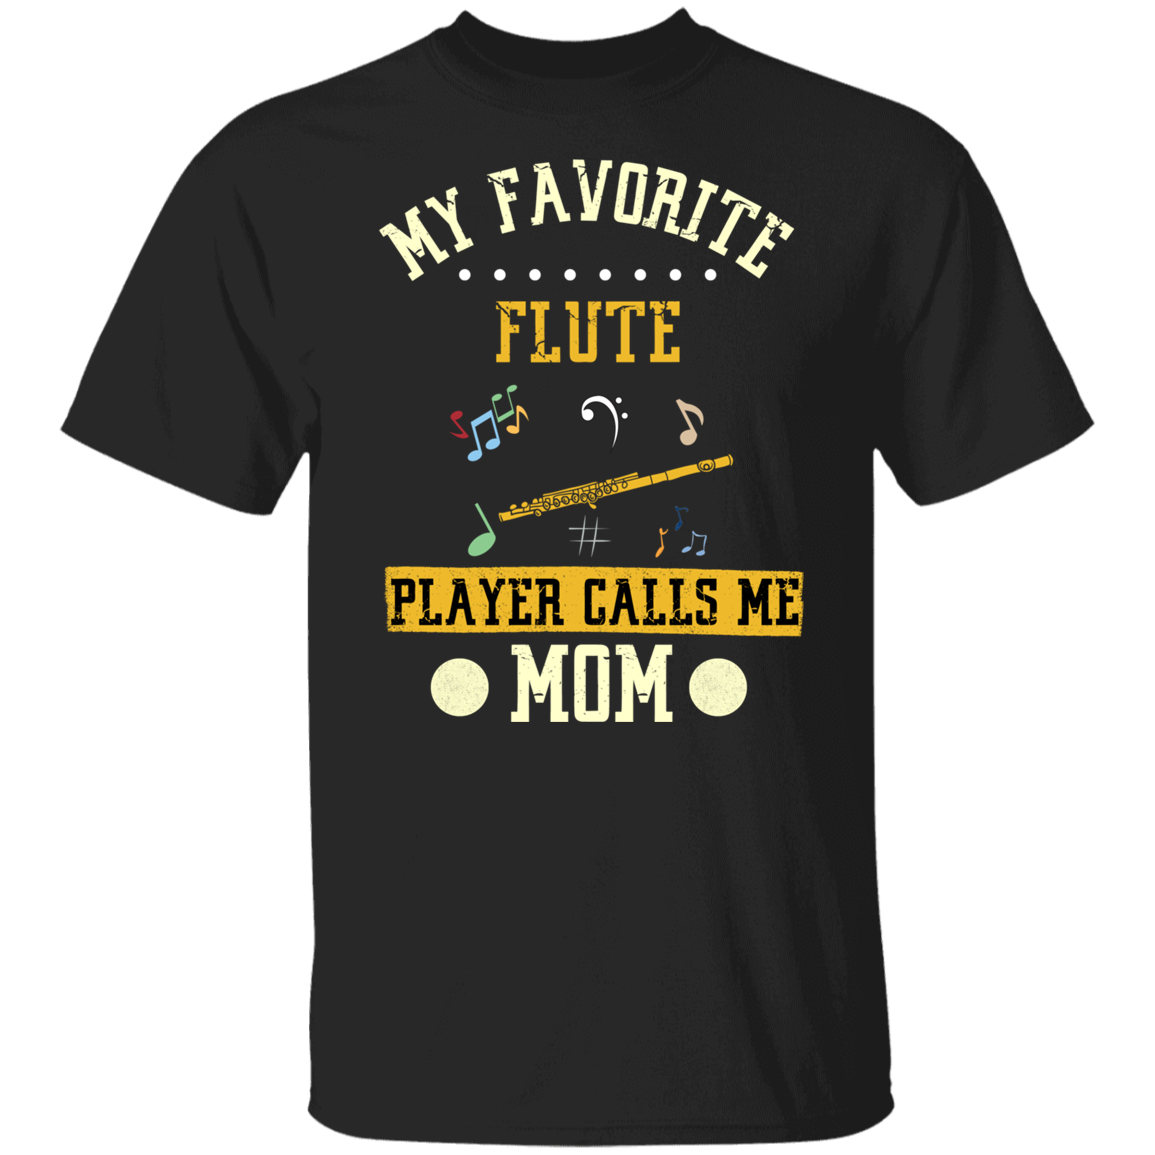 Favorite Flute T-Shirt